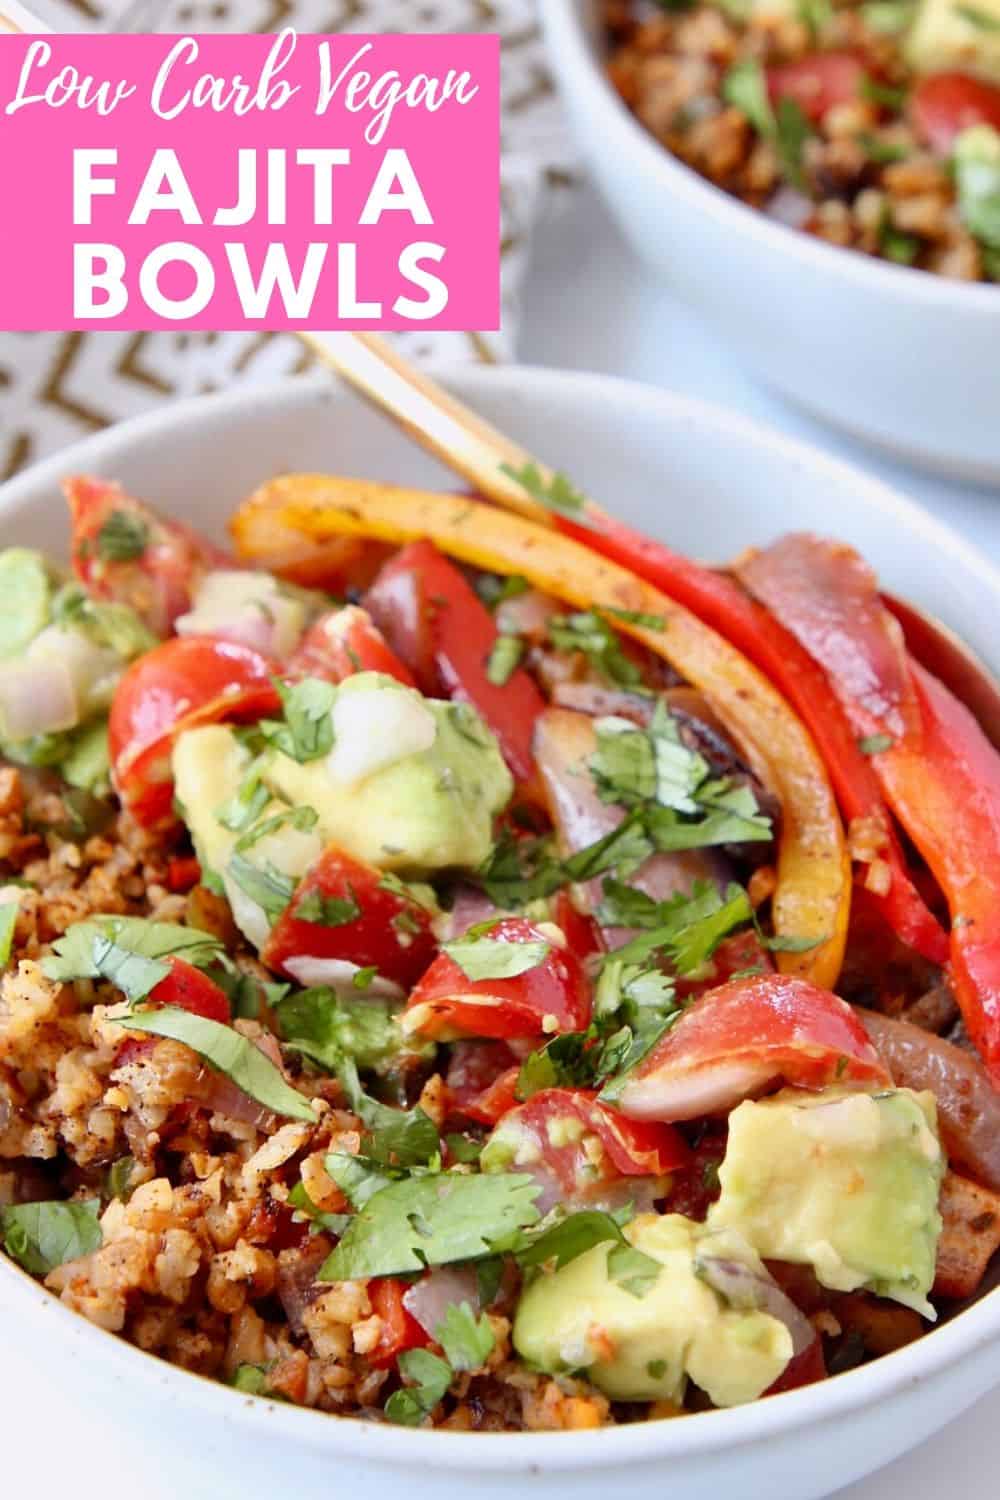 Low Carb Vegan Fajita Bowl - Bowls Are The New Plates